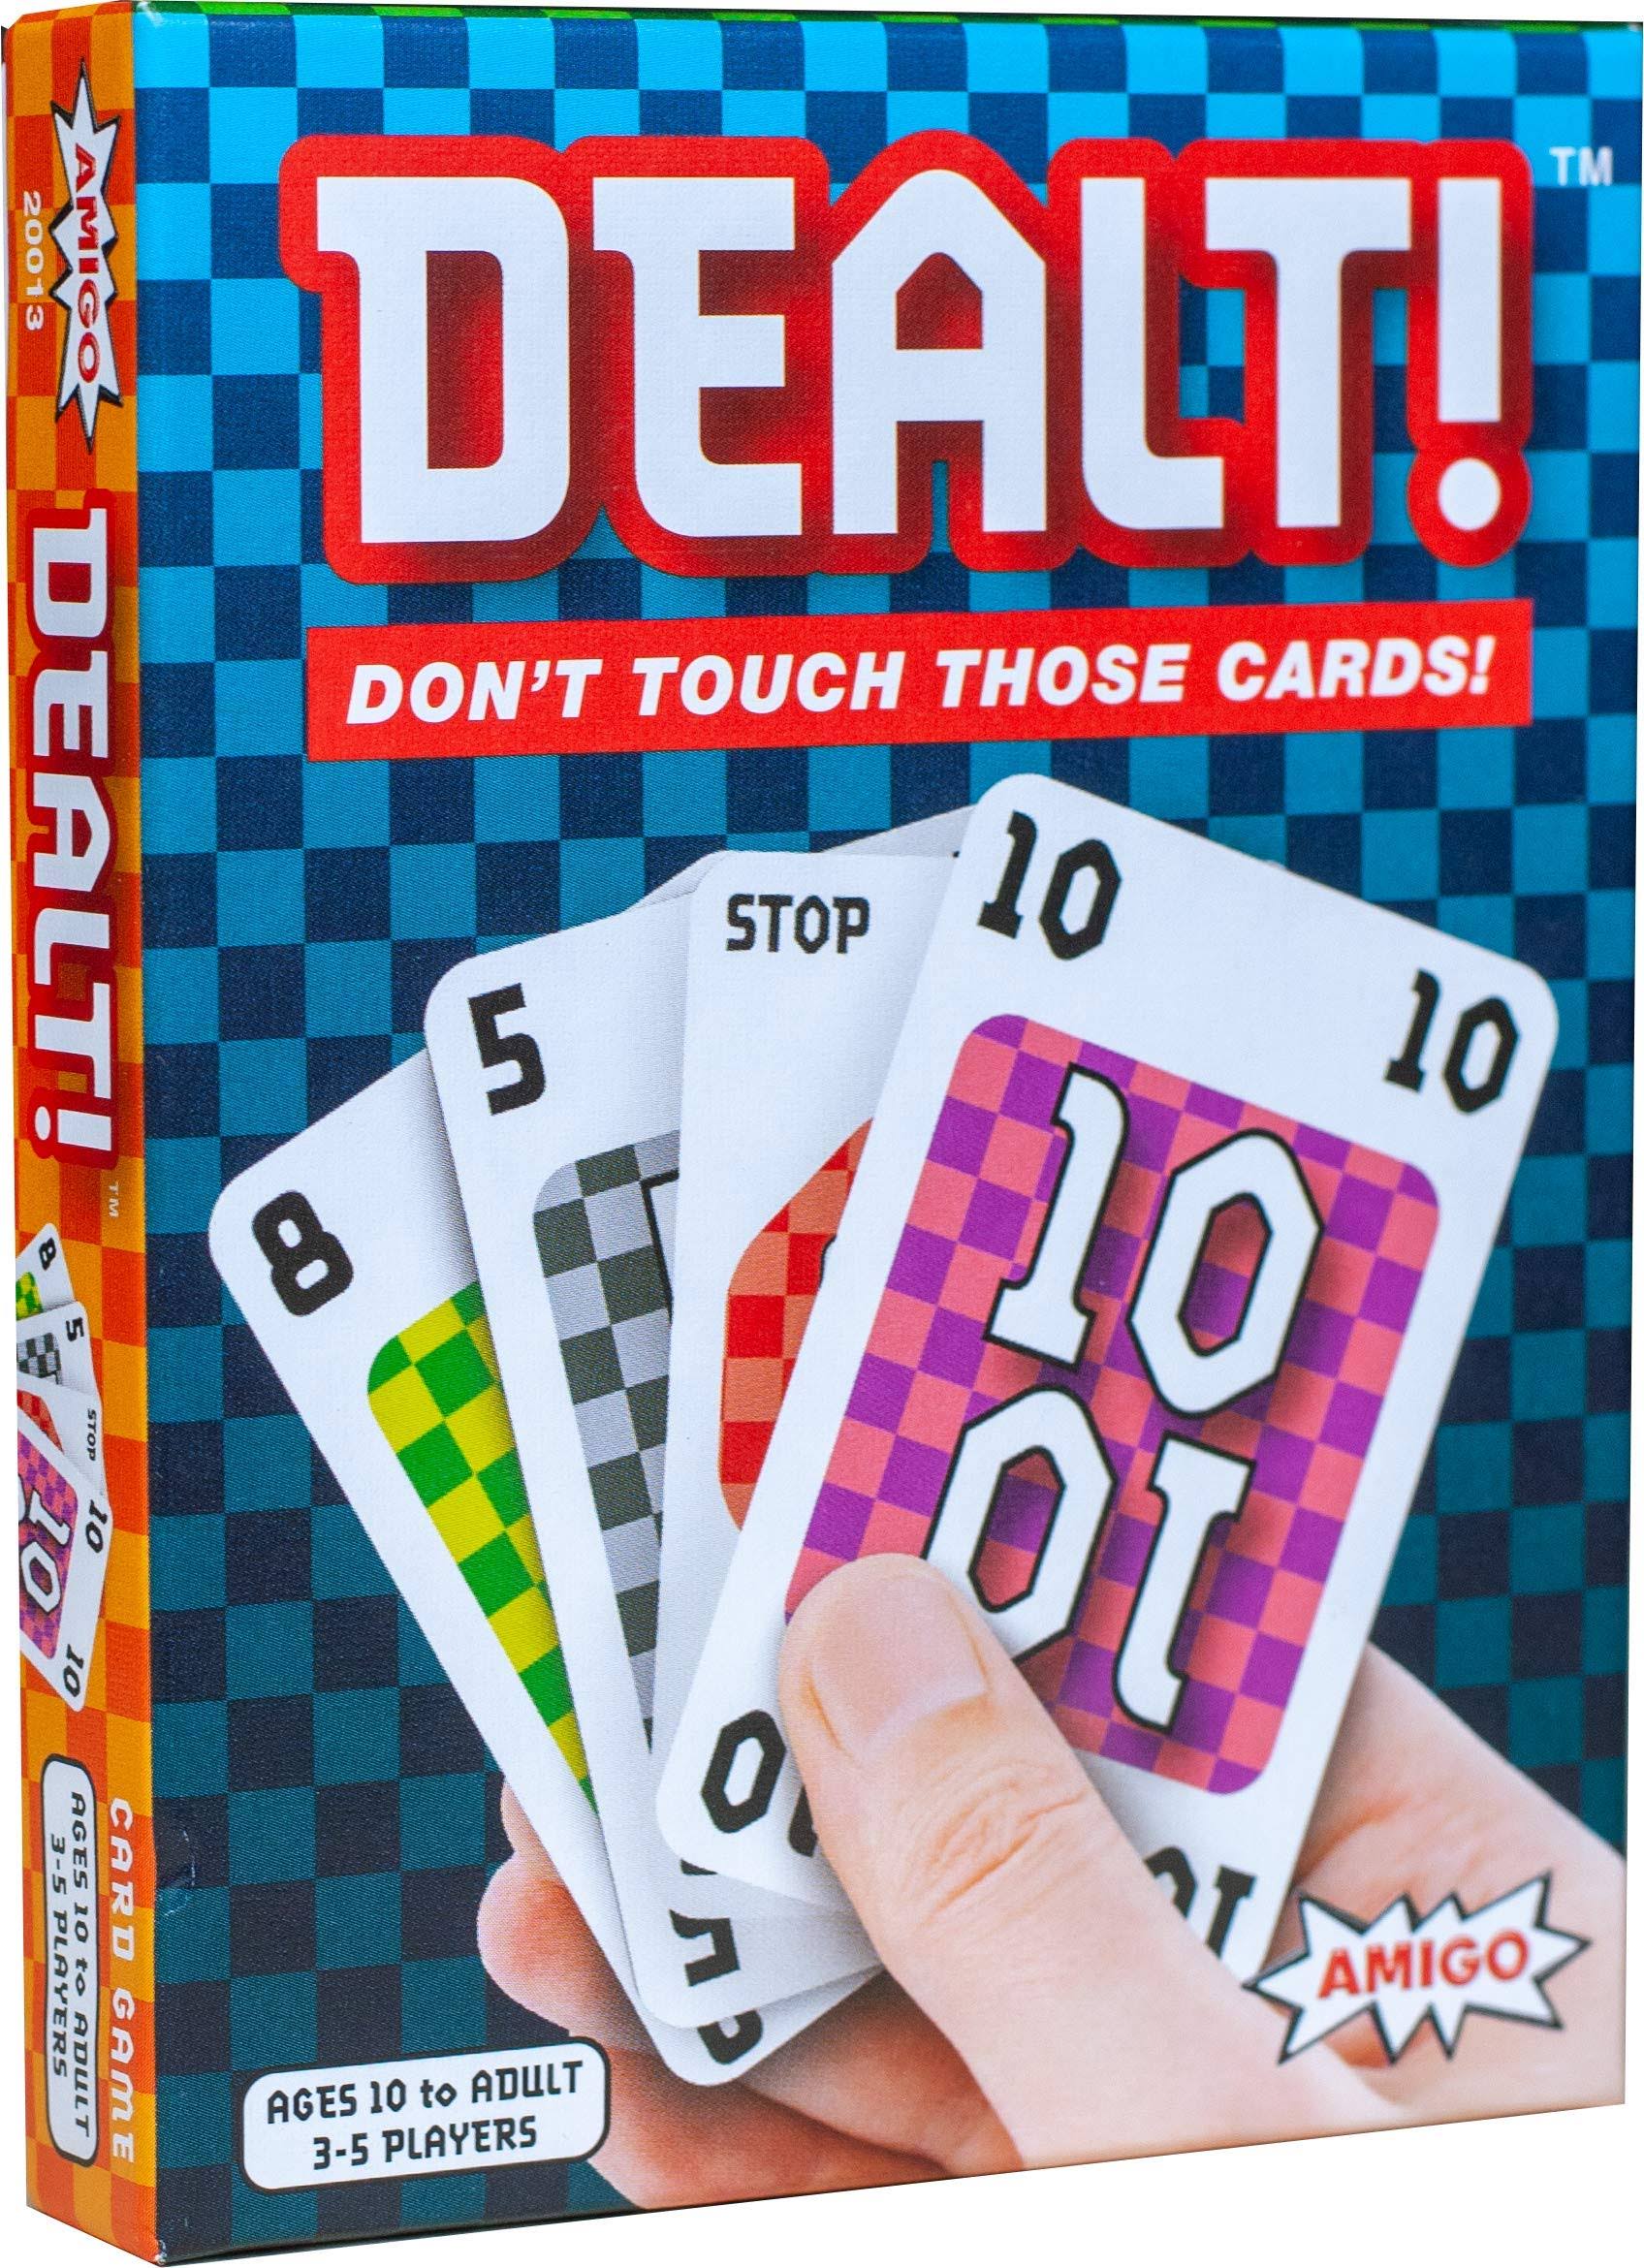 Dealt! Strategy Card Game